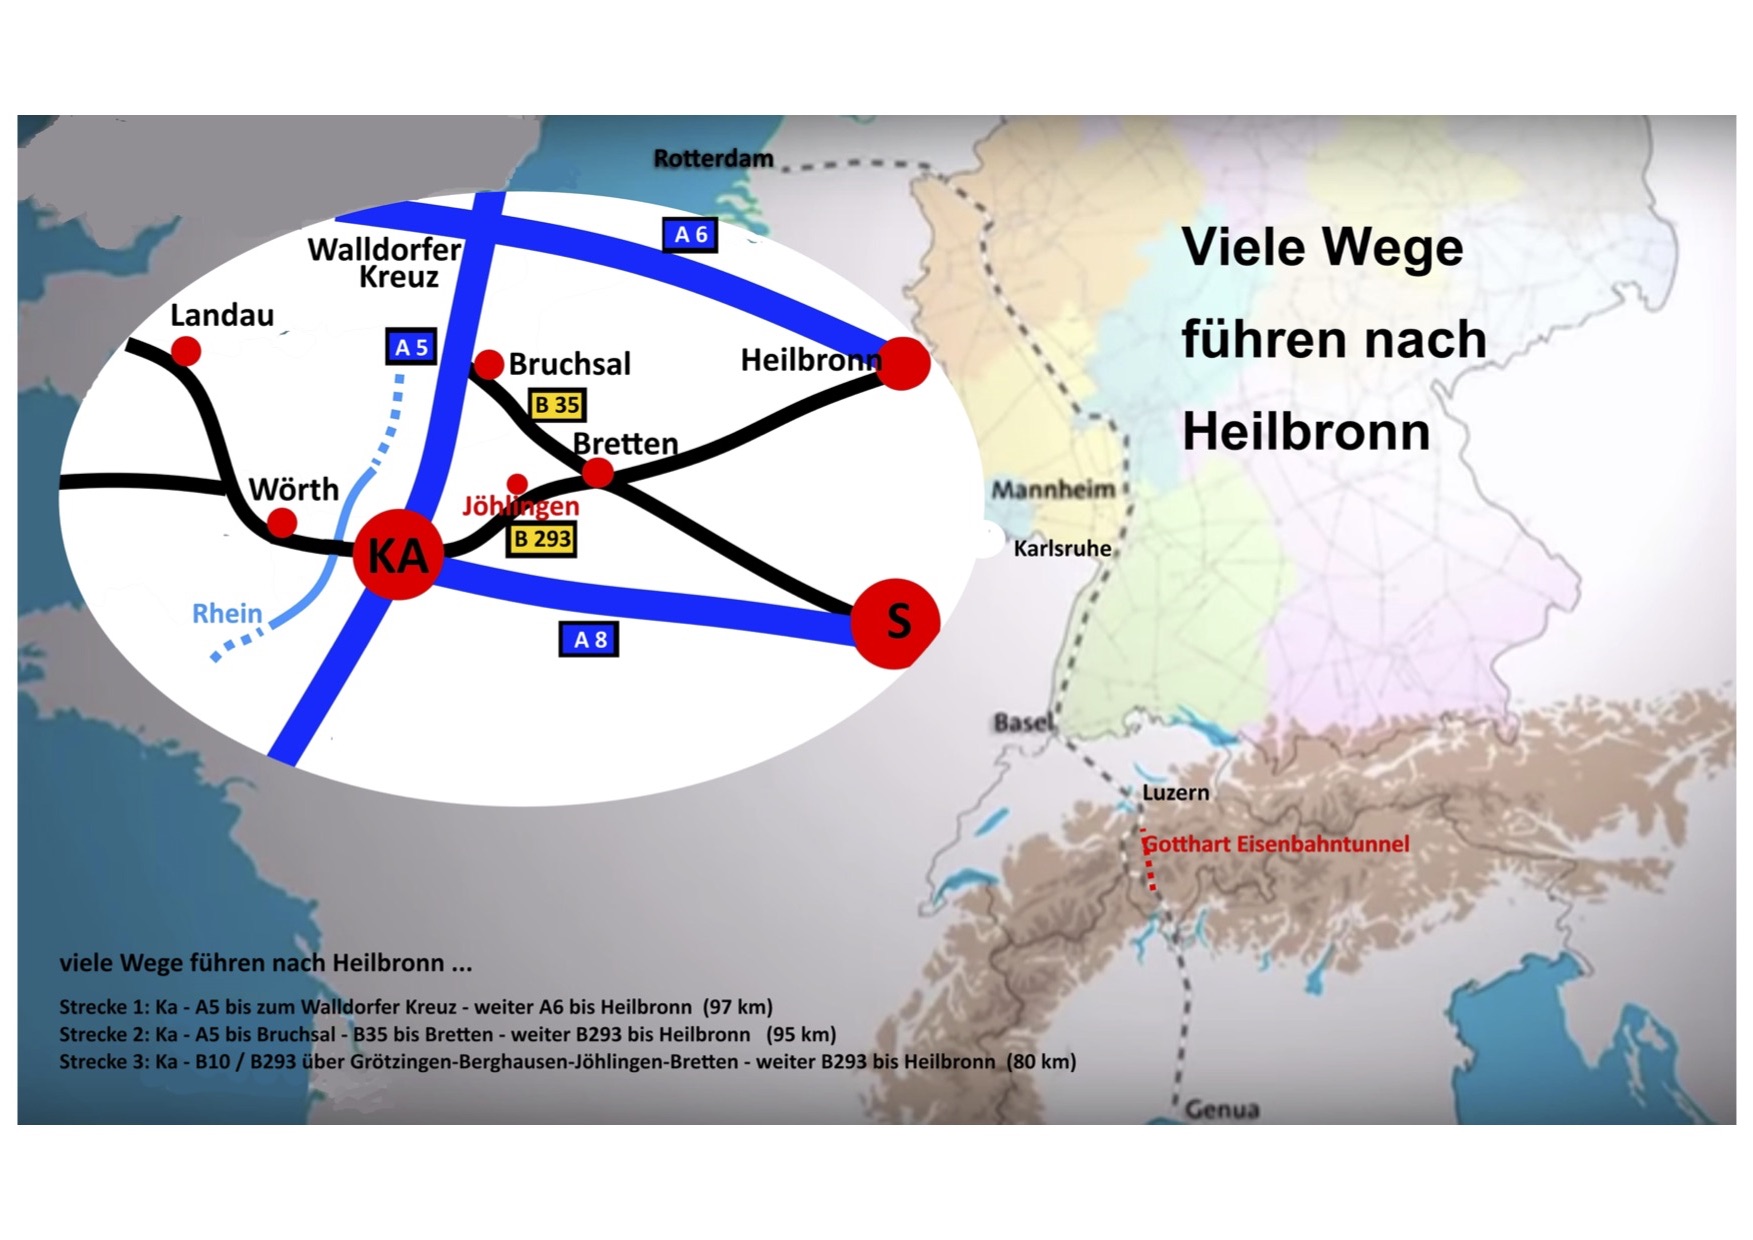 Viele Wege führen nach Heilbronn